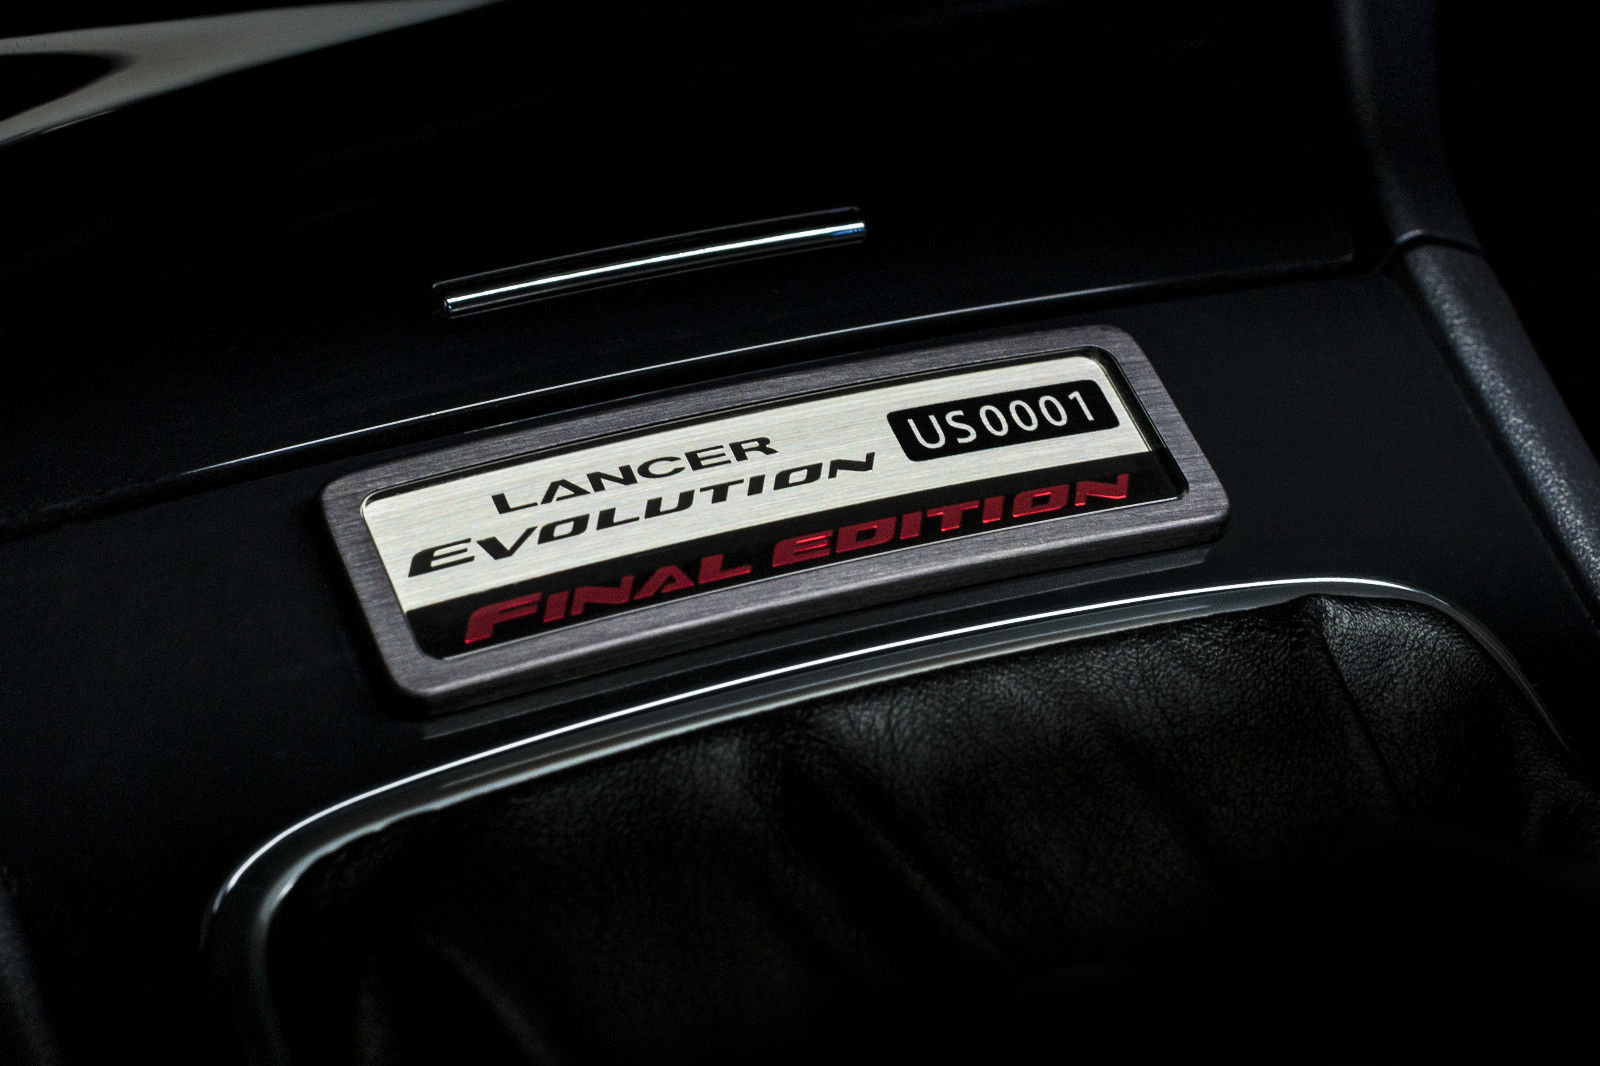 2016-Mitsubishi-Lancer-Evolution-Final-Edition-US-9-autonovosti.me-9